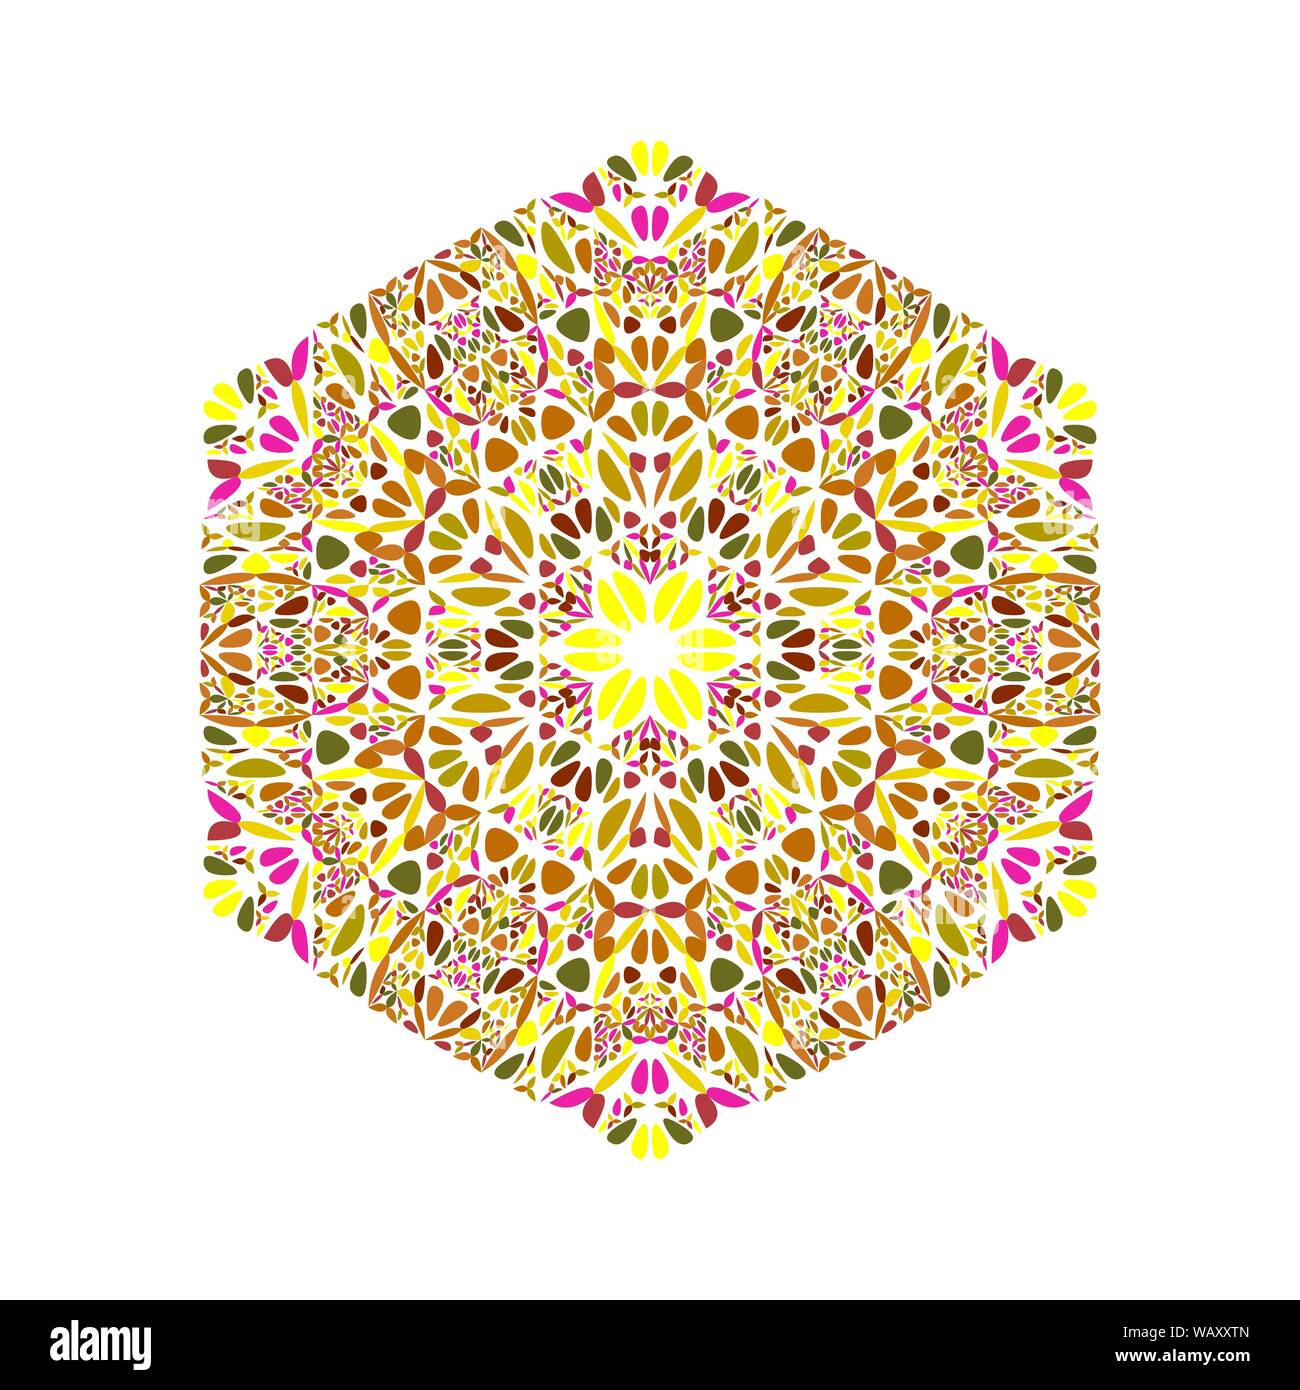 Abstrakt bunt verzierten isoliert floral Mosaik Verzierung hexagon Logo template-dekorativen geometrischen sechseckige Vektor Element mit geschwungenen Formen Stock Vektor